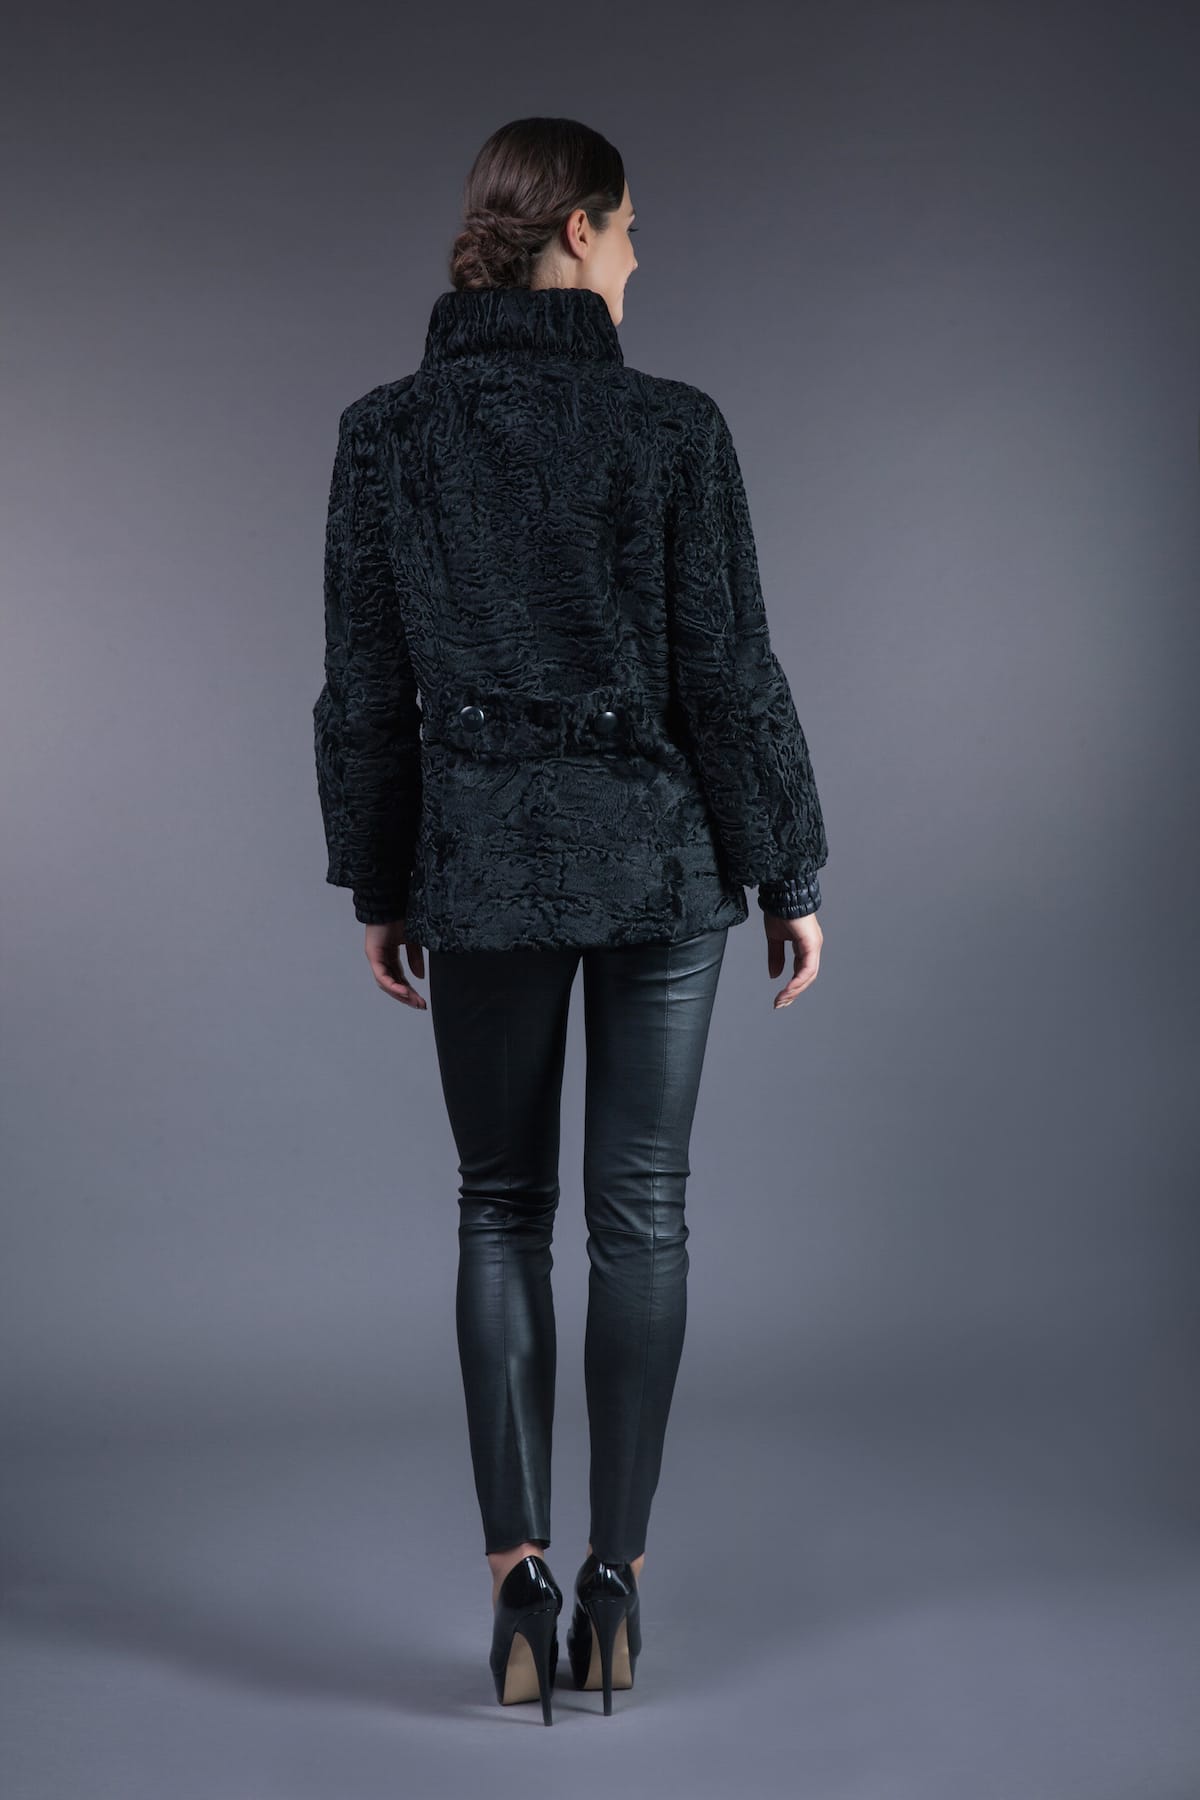 Black Karakul Fur Jacket with Round Collar | Handmade by NordFur